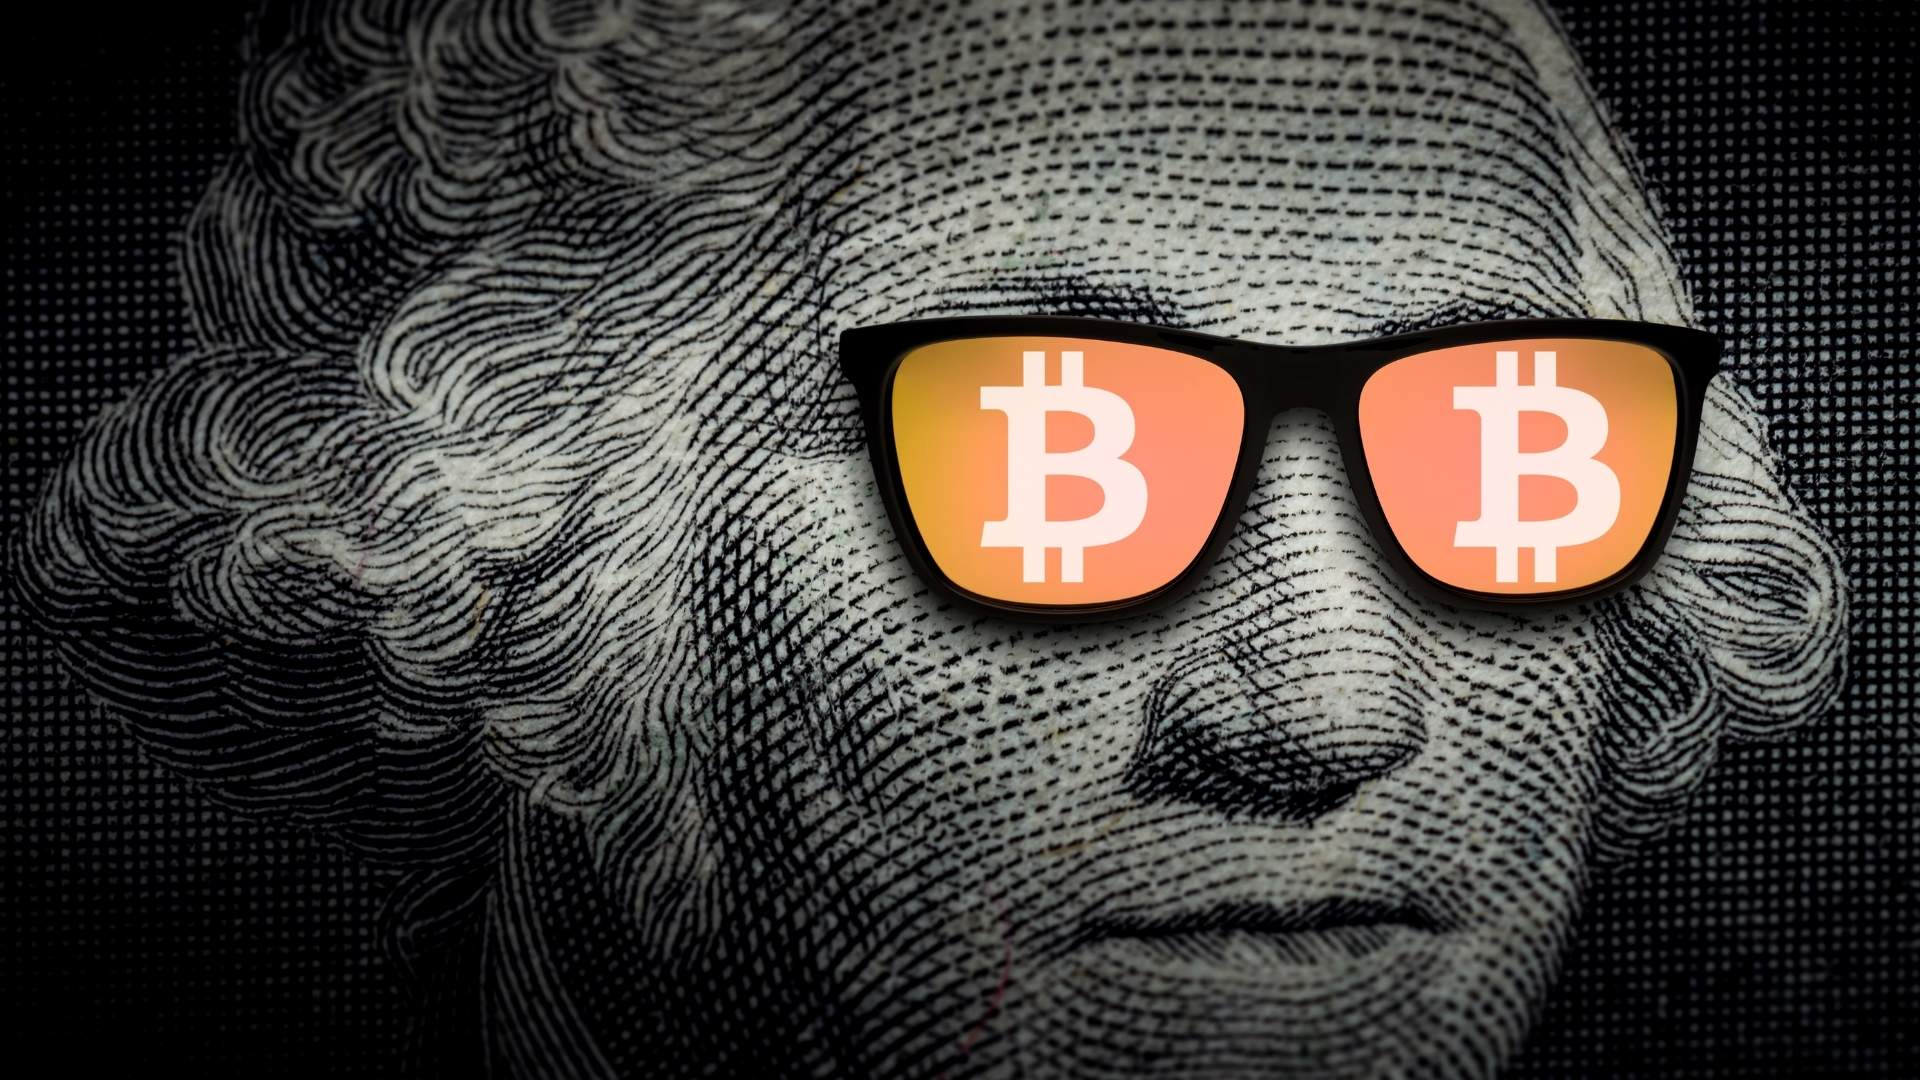 Future of bitcoin